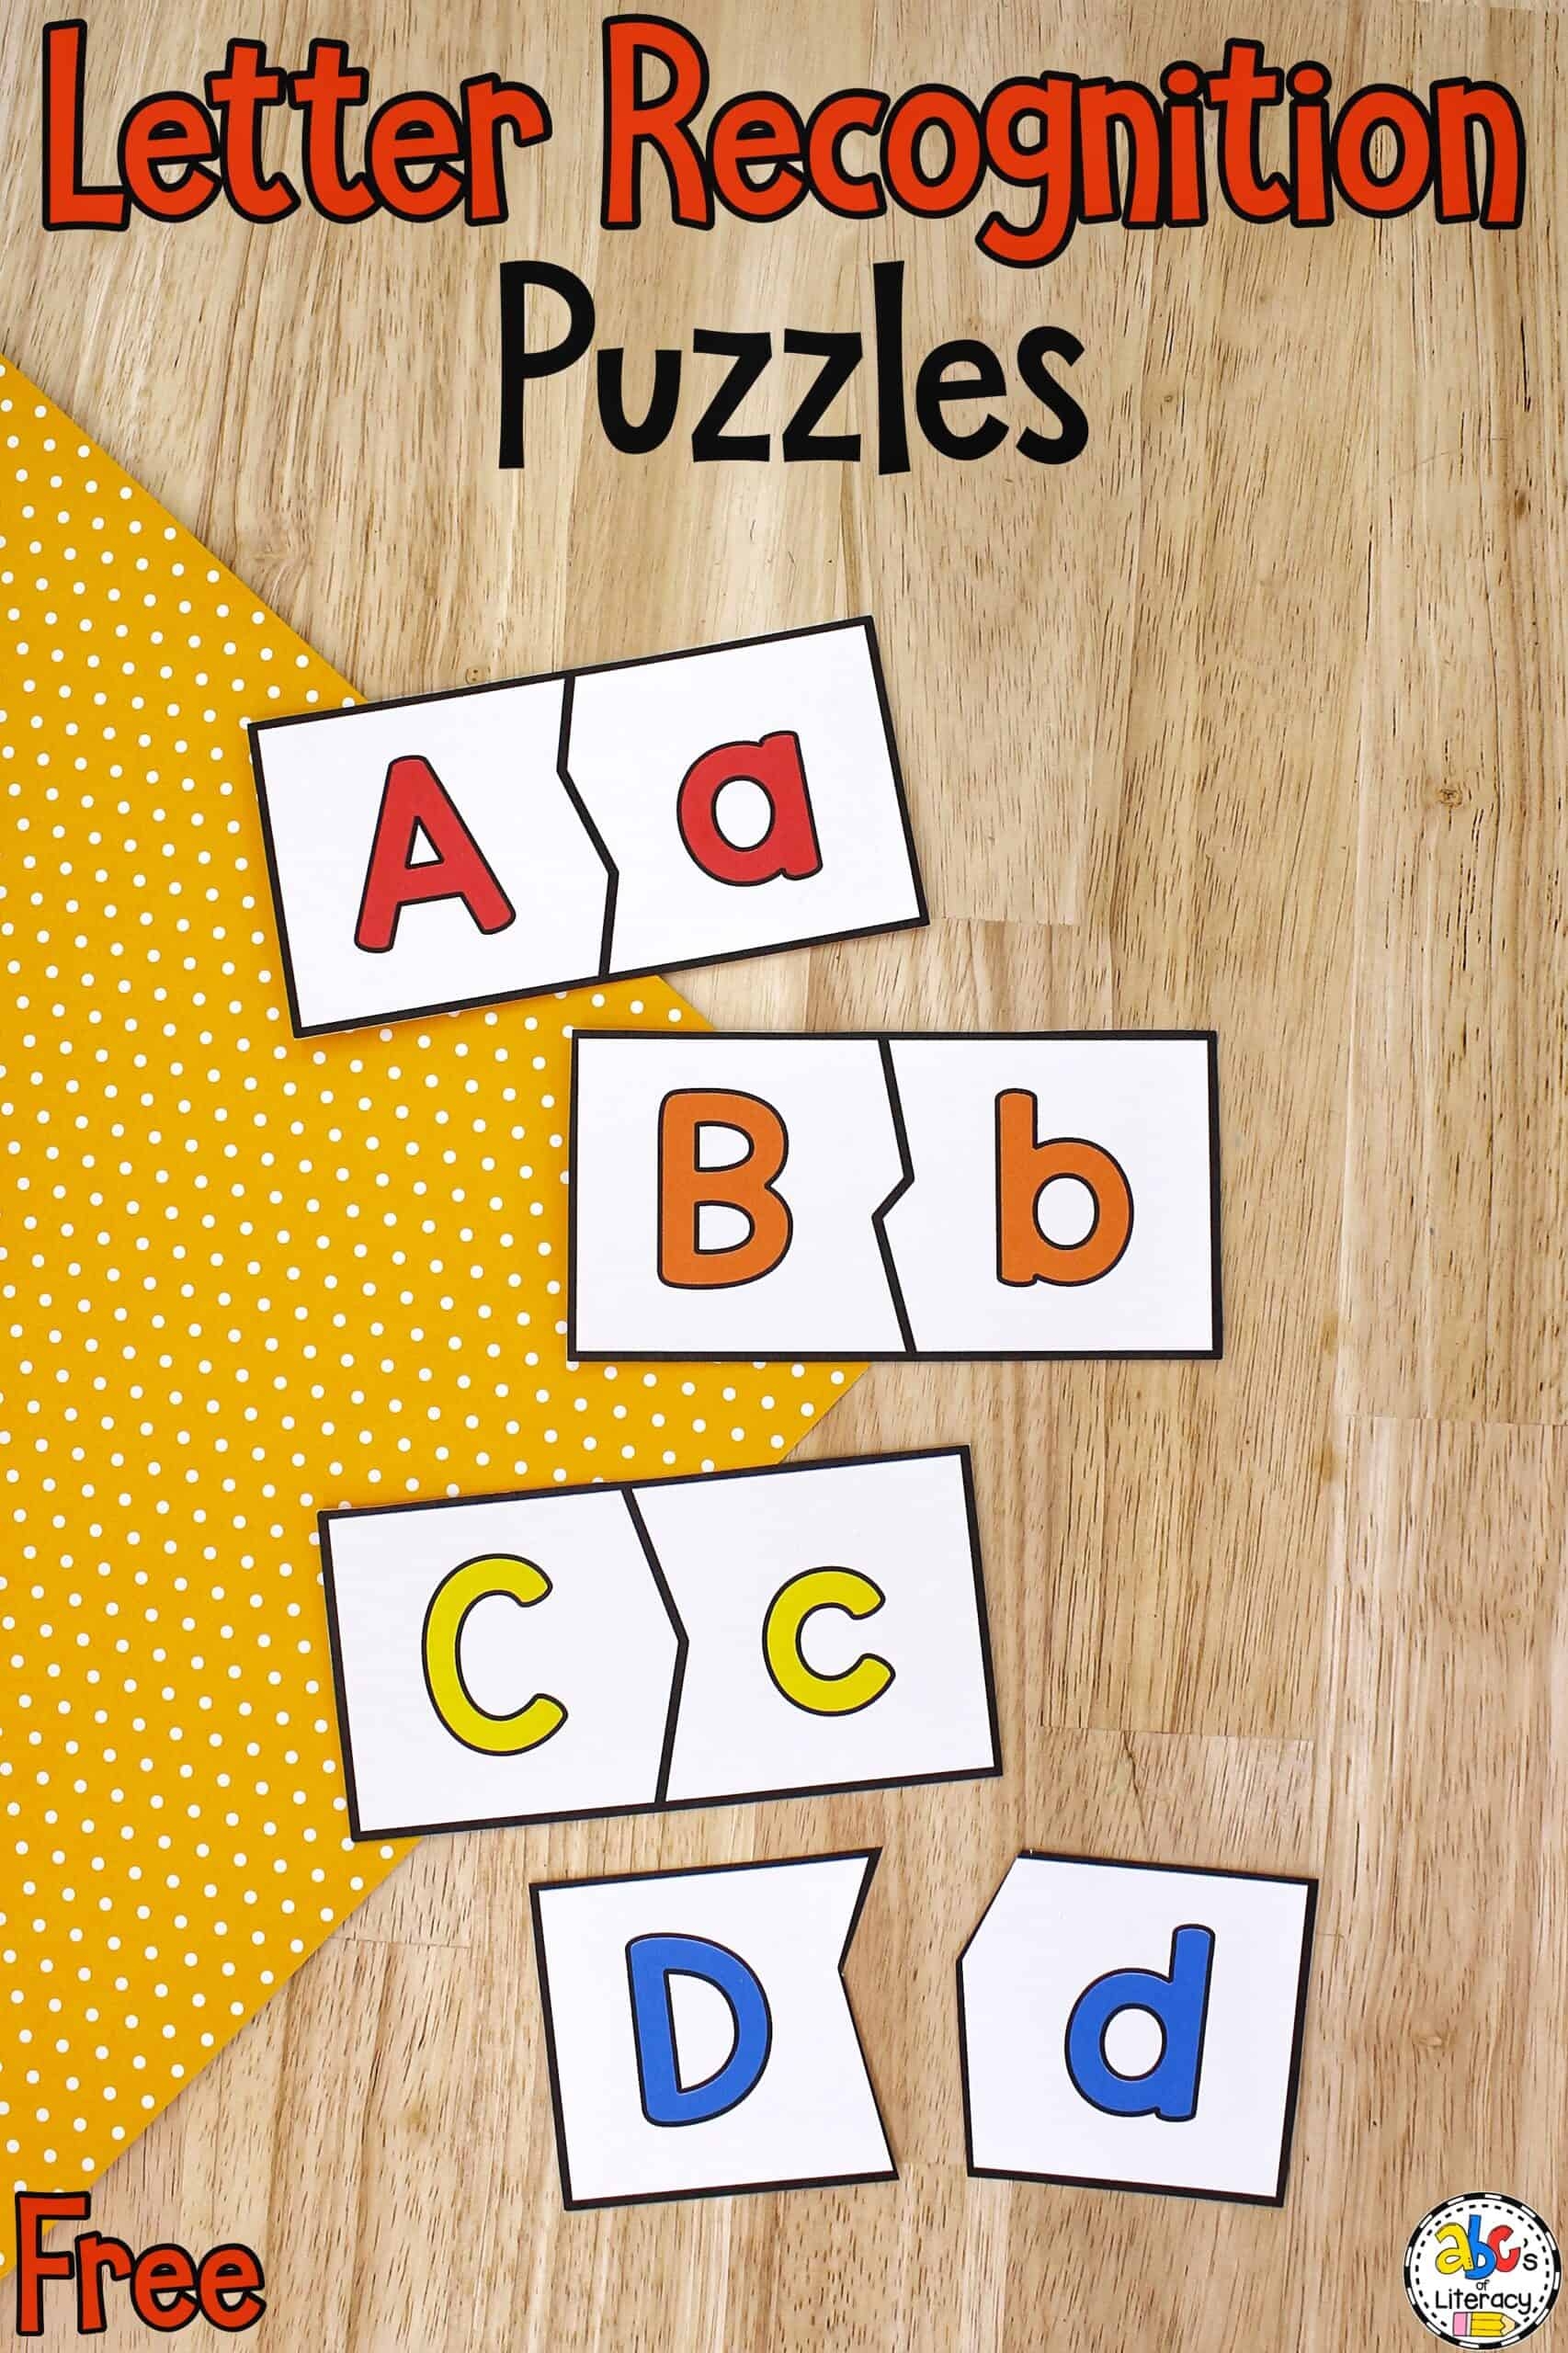 Letter Recognition Puzzles - Free Printable Alphabet Puzzles